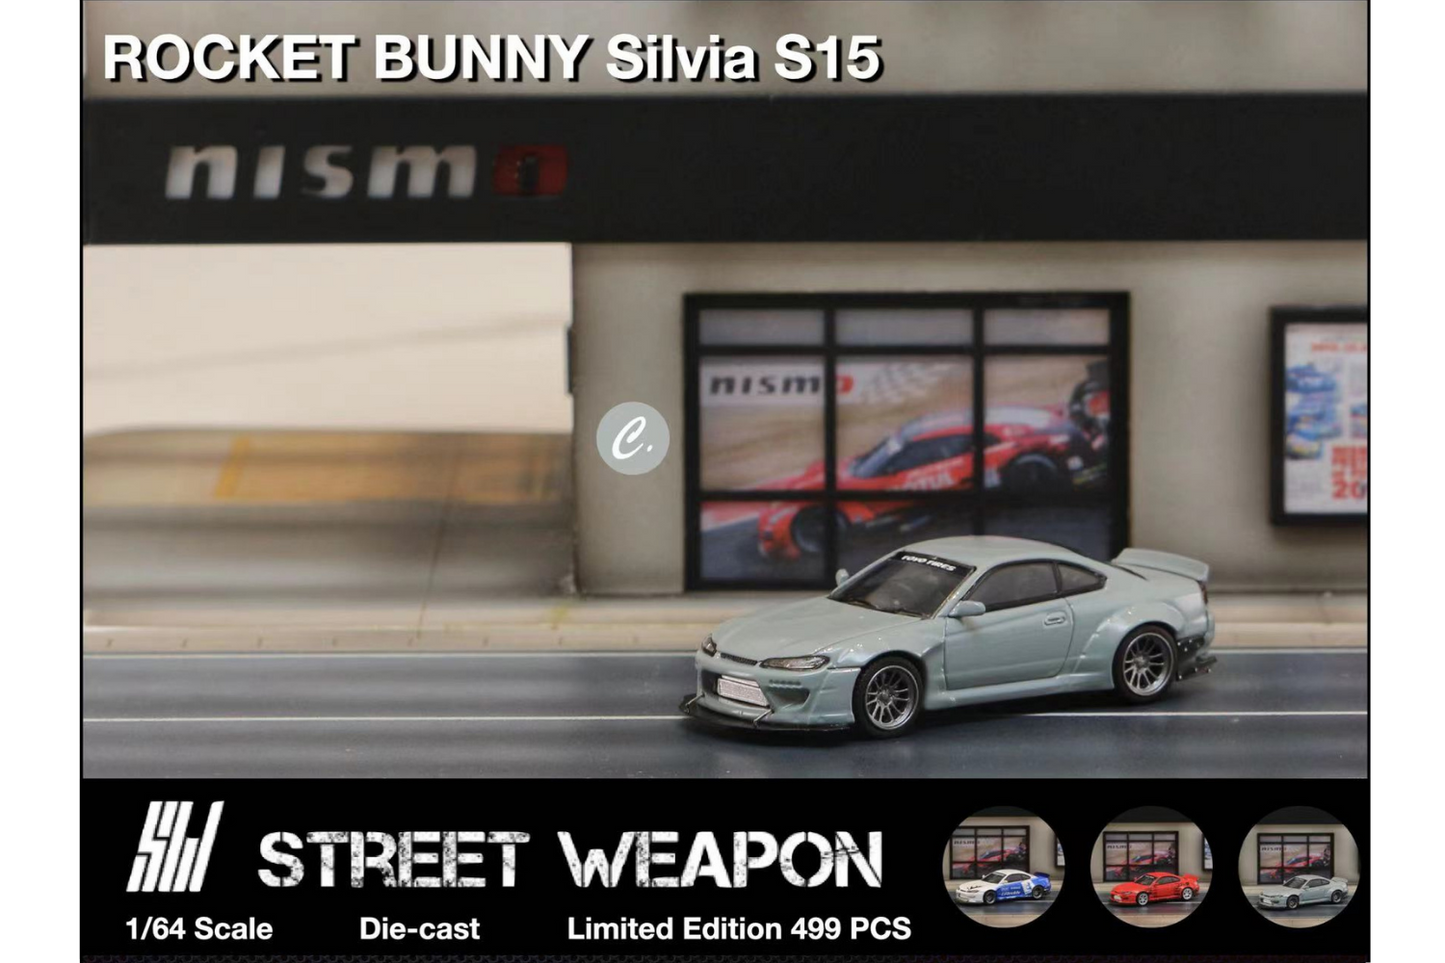 Street Weapon 1/64 Rocket Bunny Nissan Silvia S15